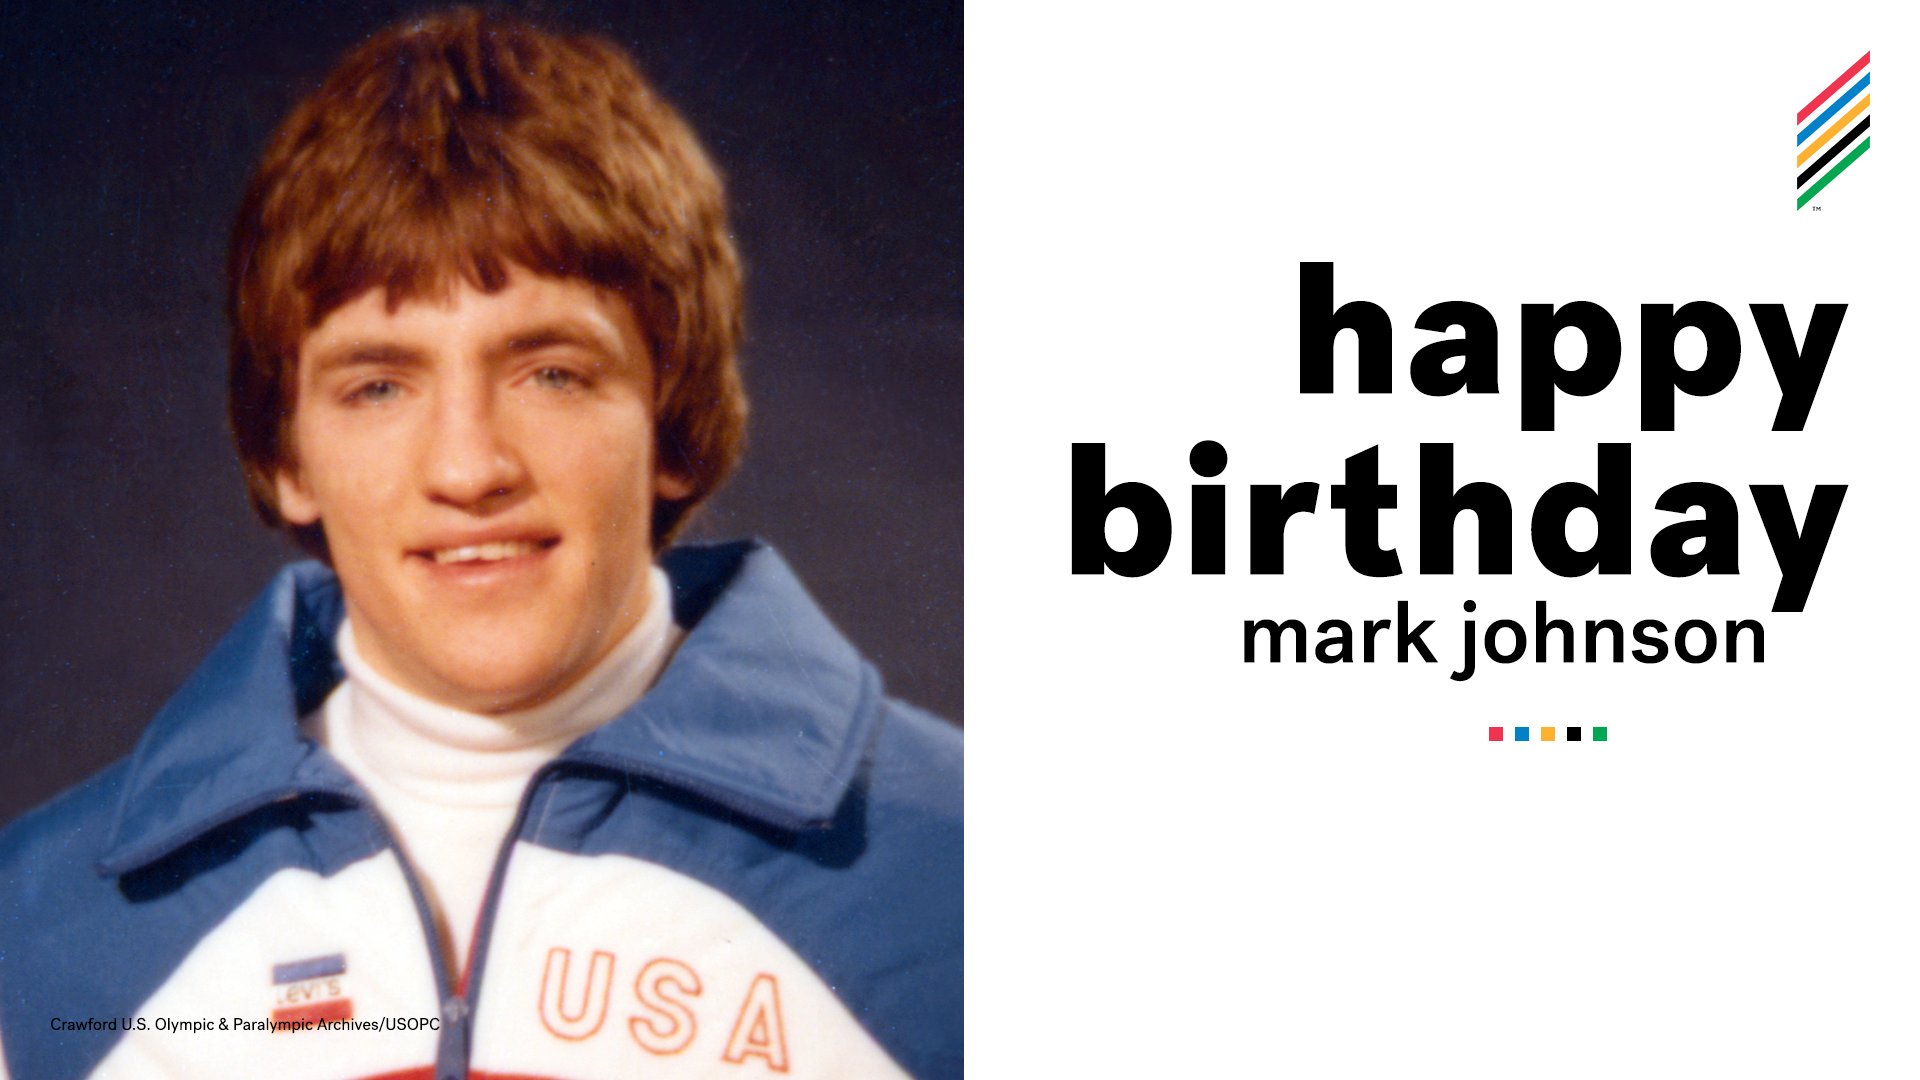 Happy birthday to Mark Johnson!

Mark was a member of the  